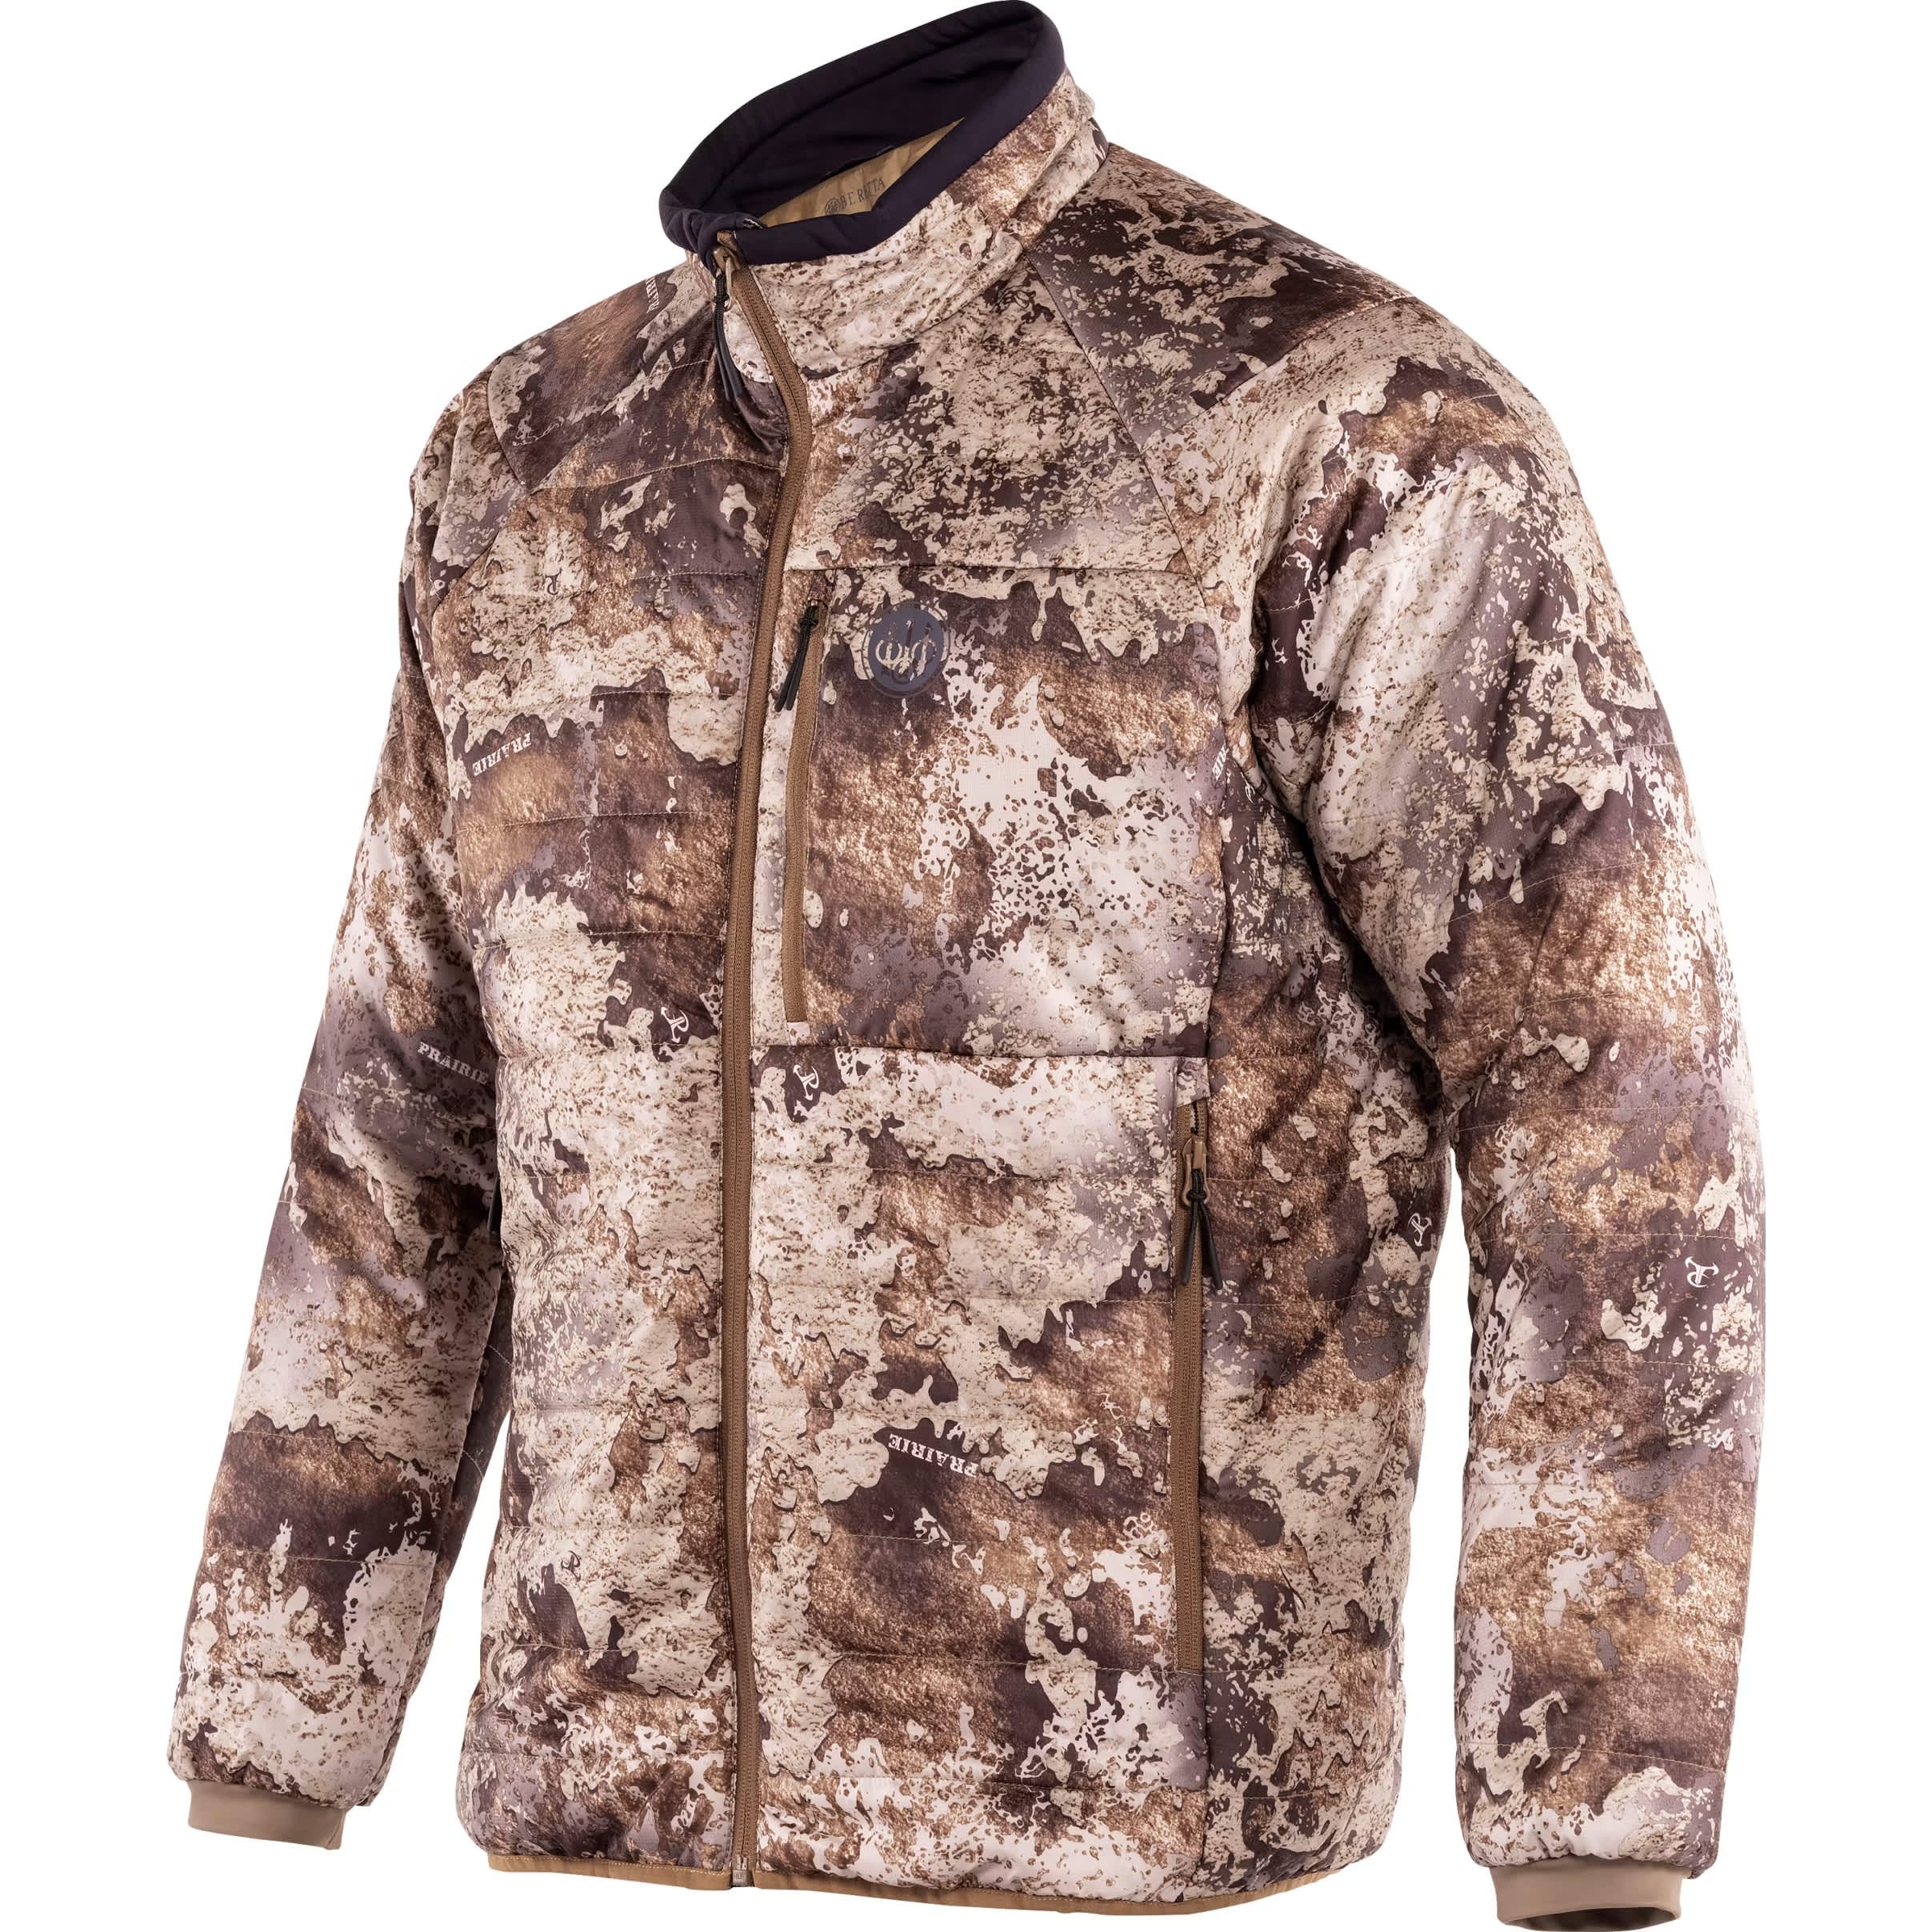 RedHead SCENTINEL Tech Windproof Fleece Jacket for Men